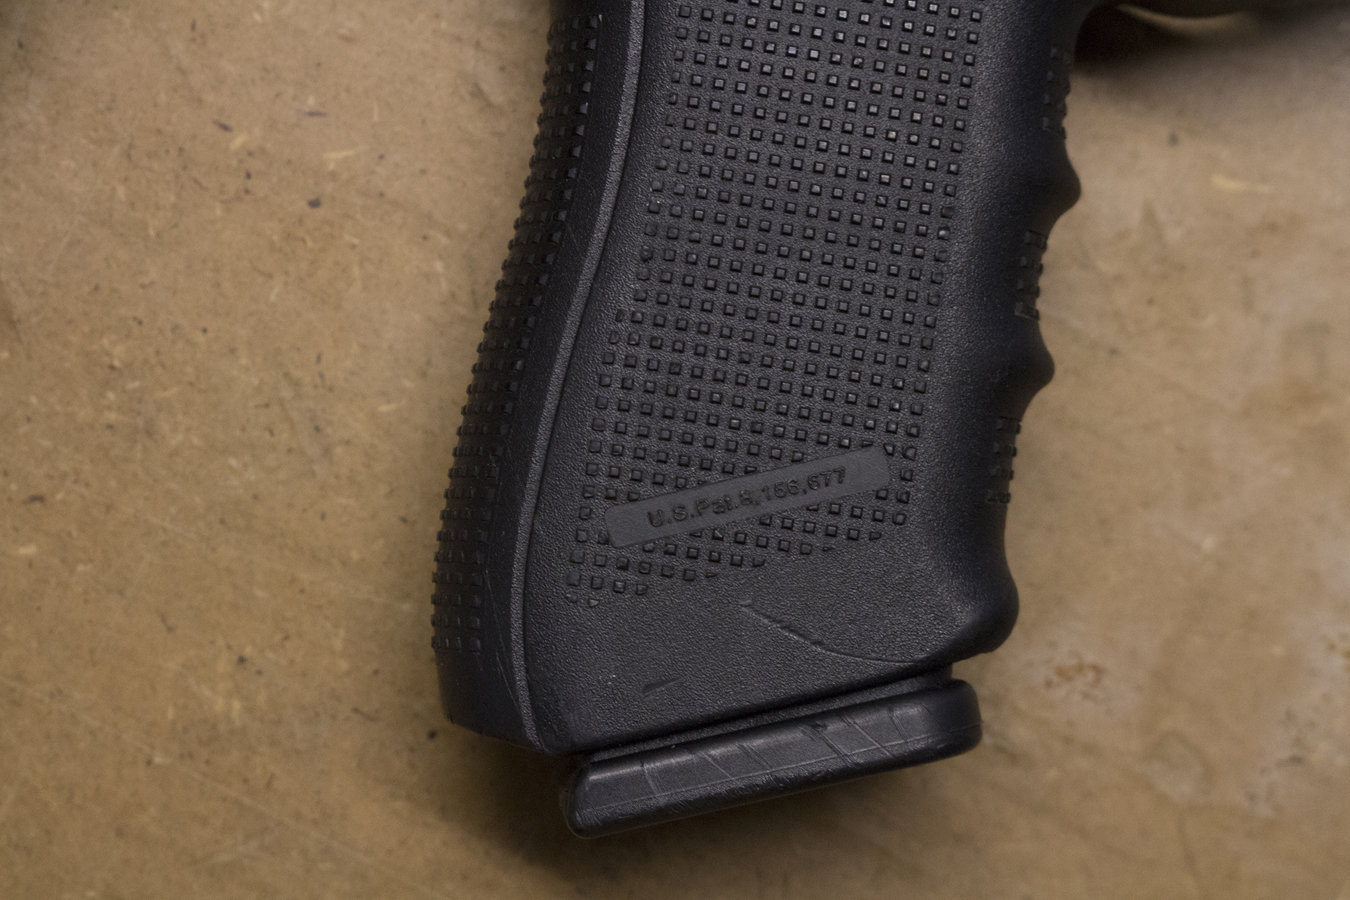 Glock 21 Gen4 45 ACP Police Trade-ins (Good Condition) | Sportsman's ...